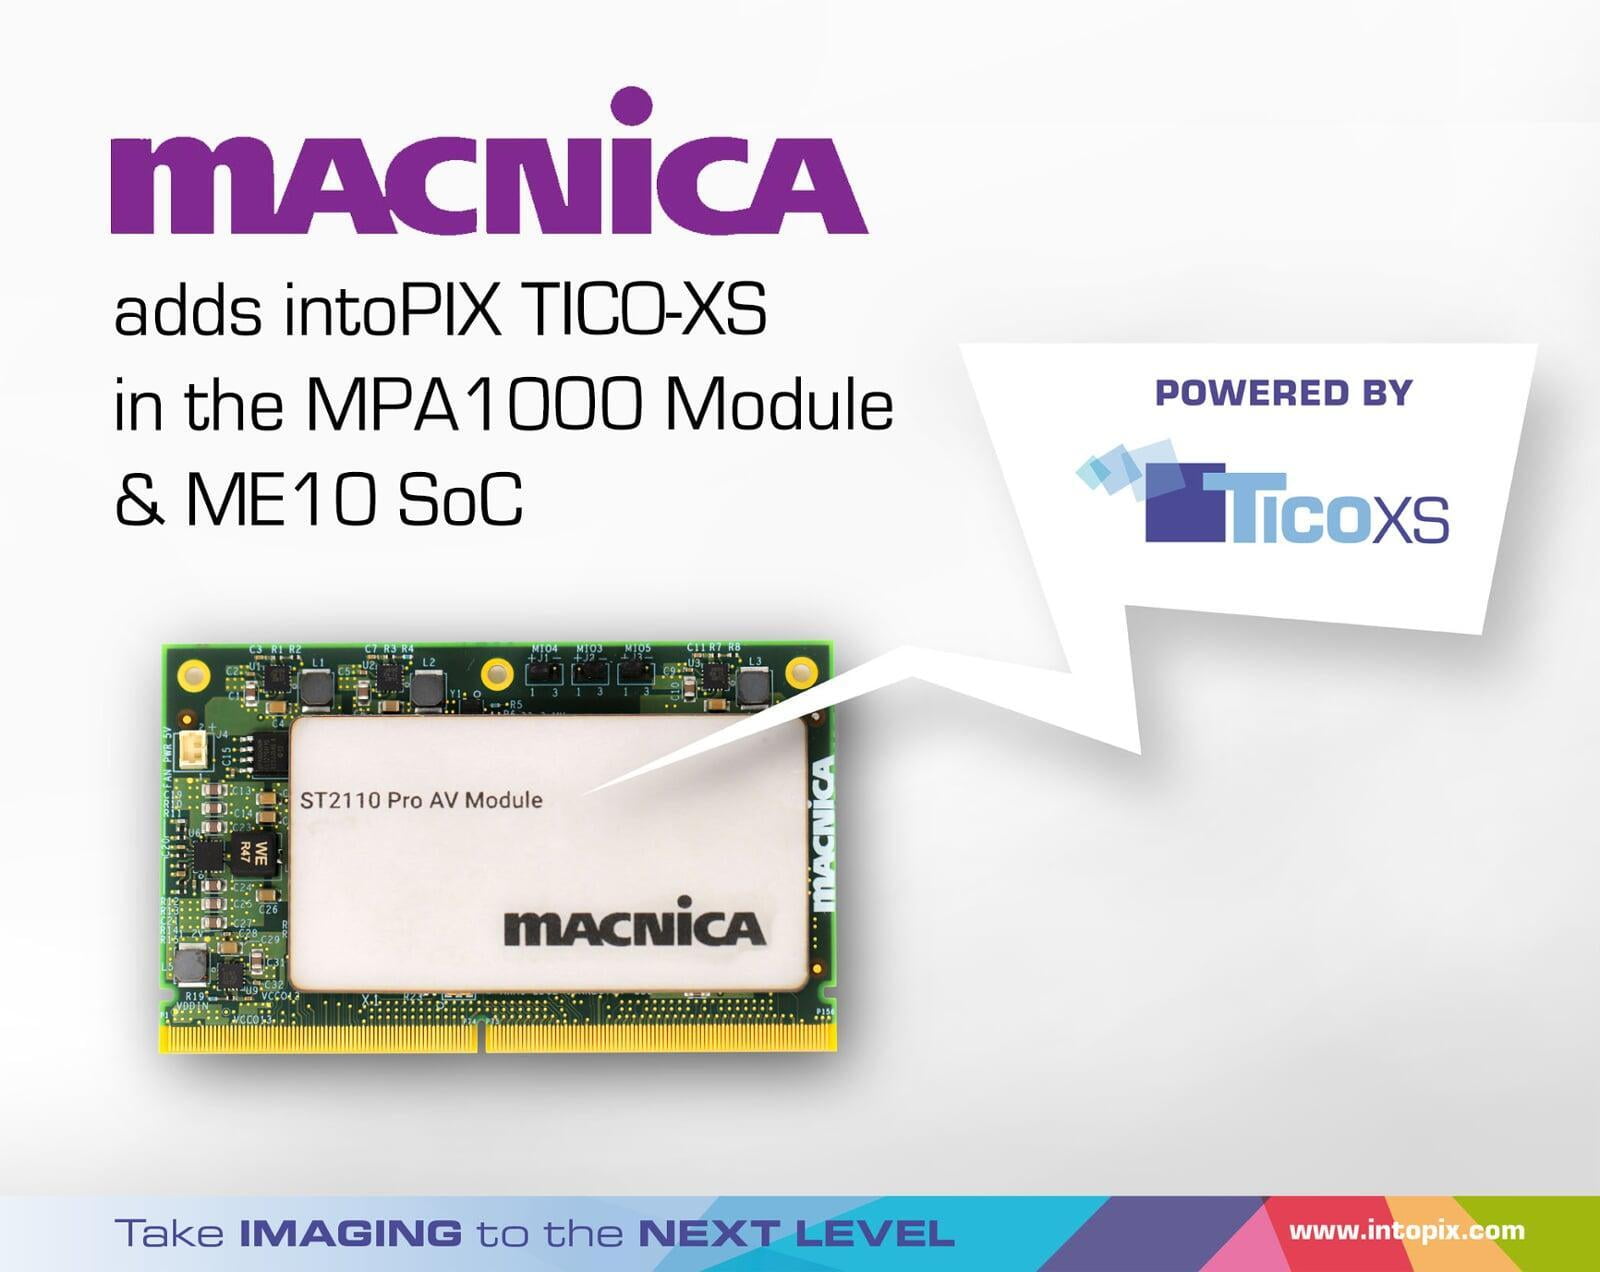 Macnica adopte intoPIX TicoXS pour ses solutions OEM ProAV 4K